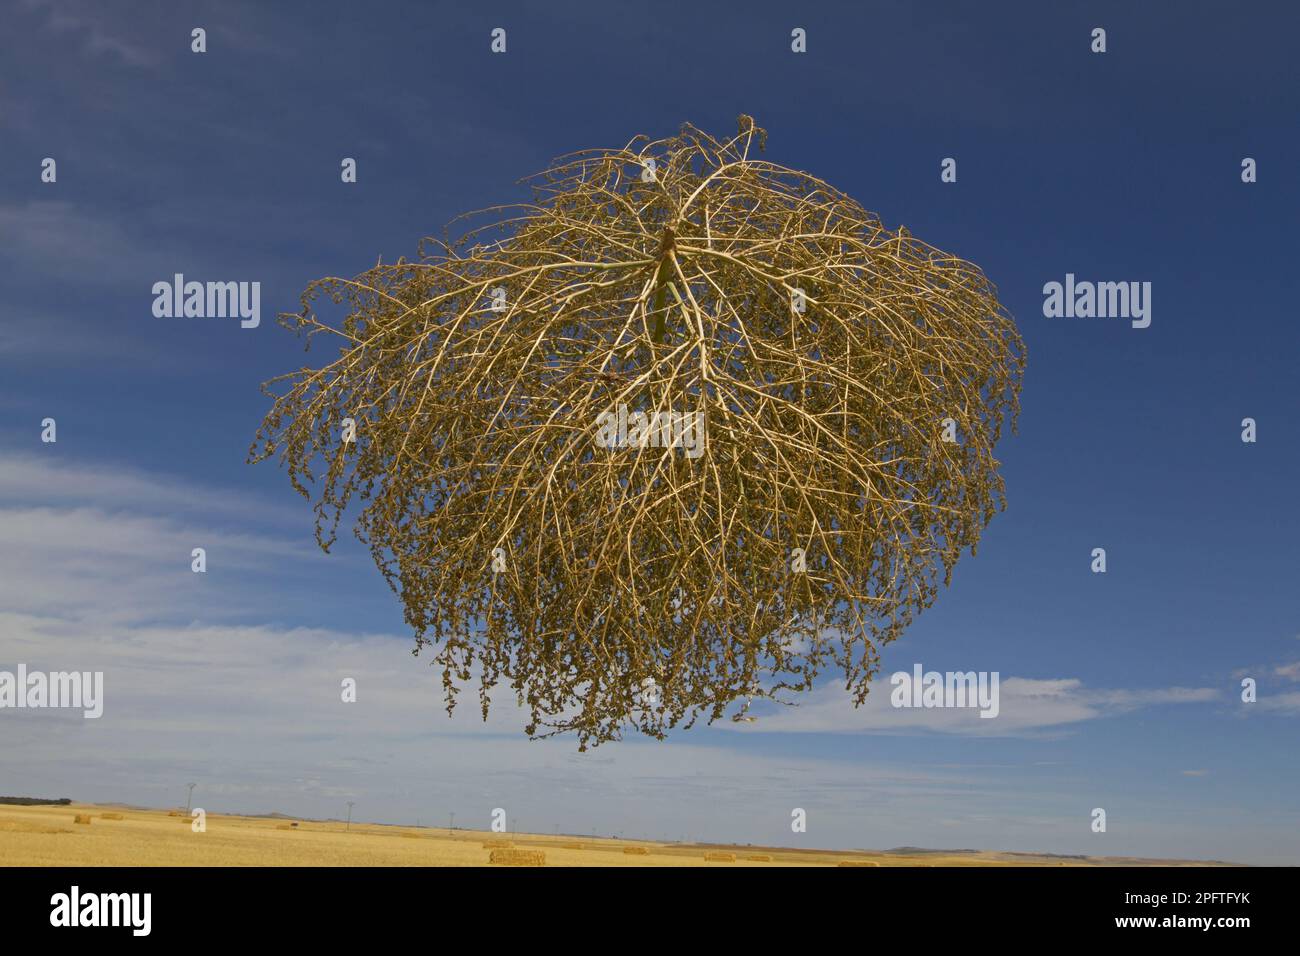 Tumbleweed (Salsola tragus) windblown dried plant, in mid-air over farmland, Spain Stock Photo